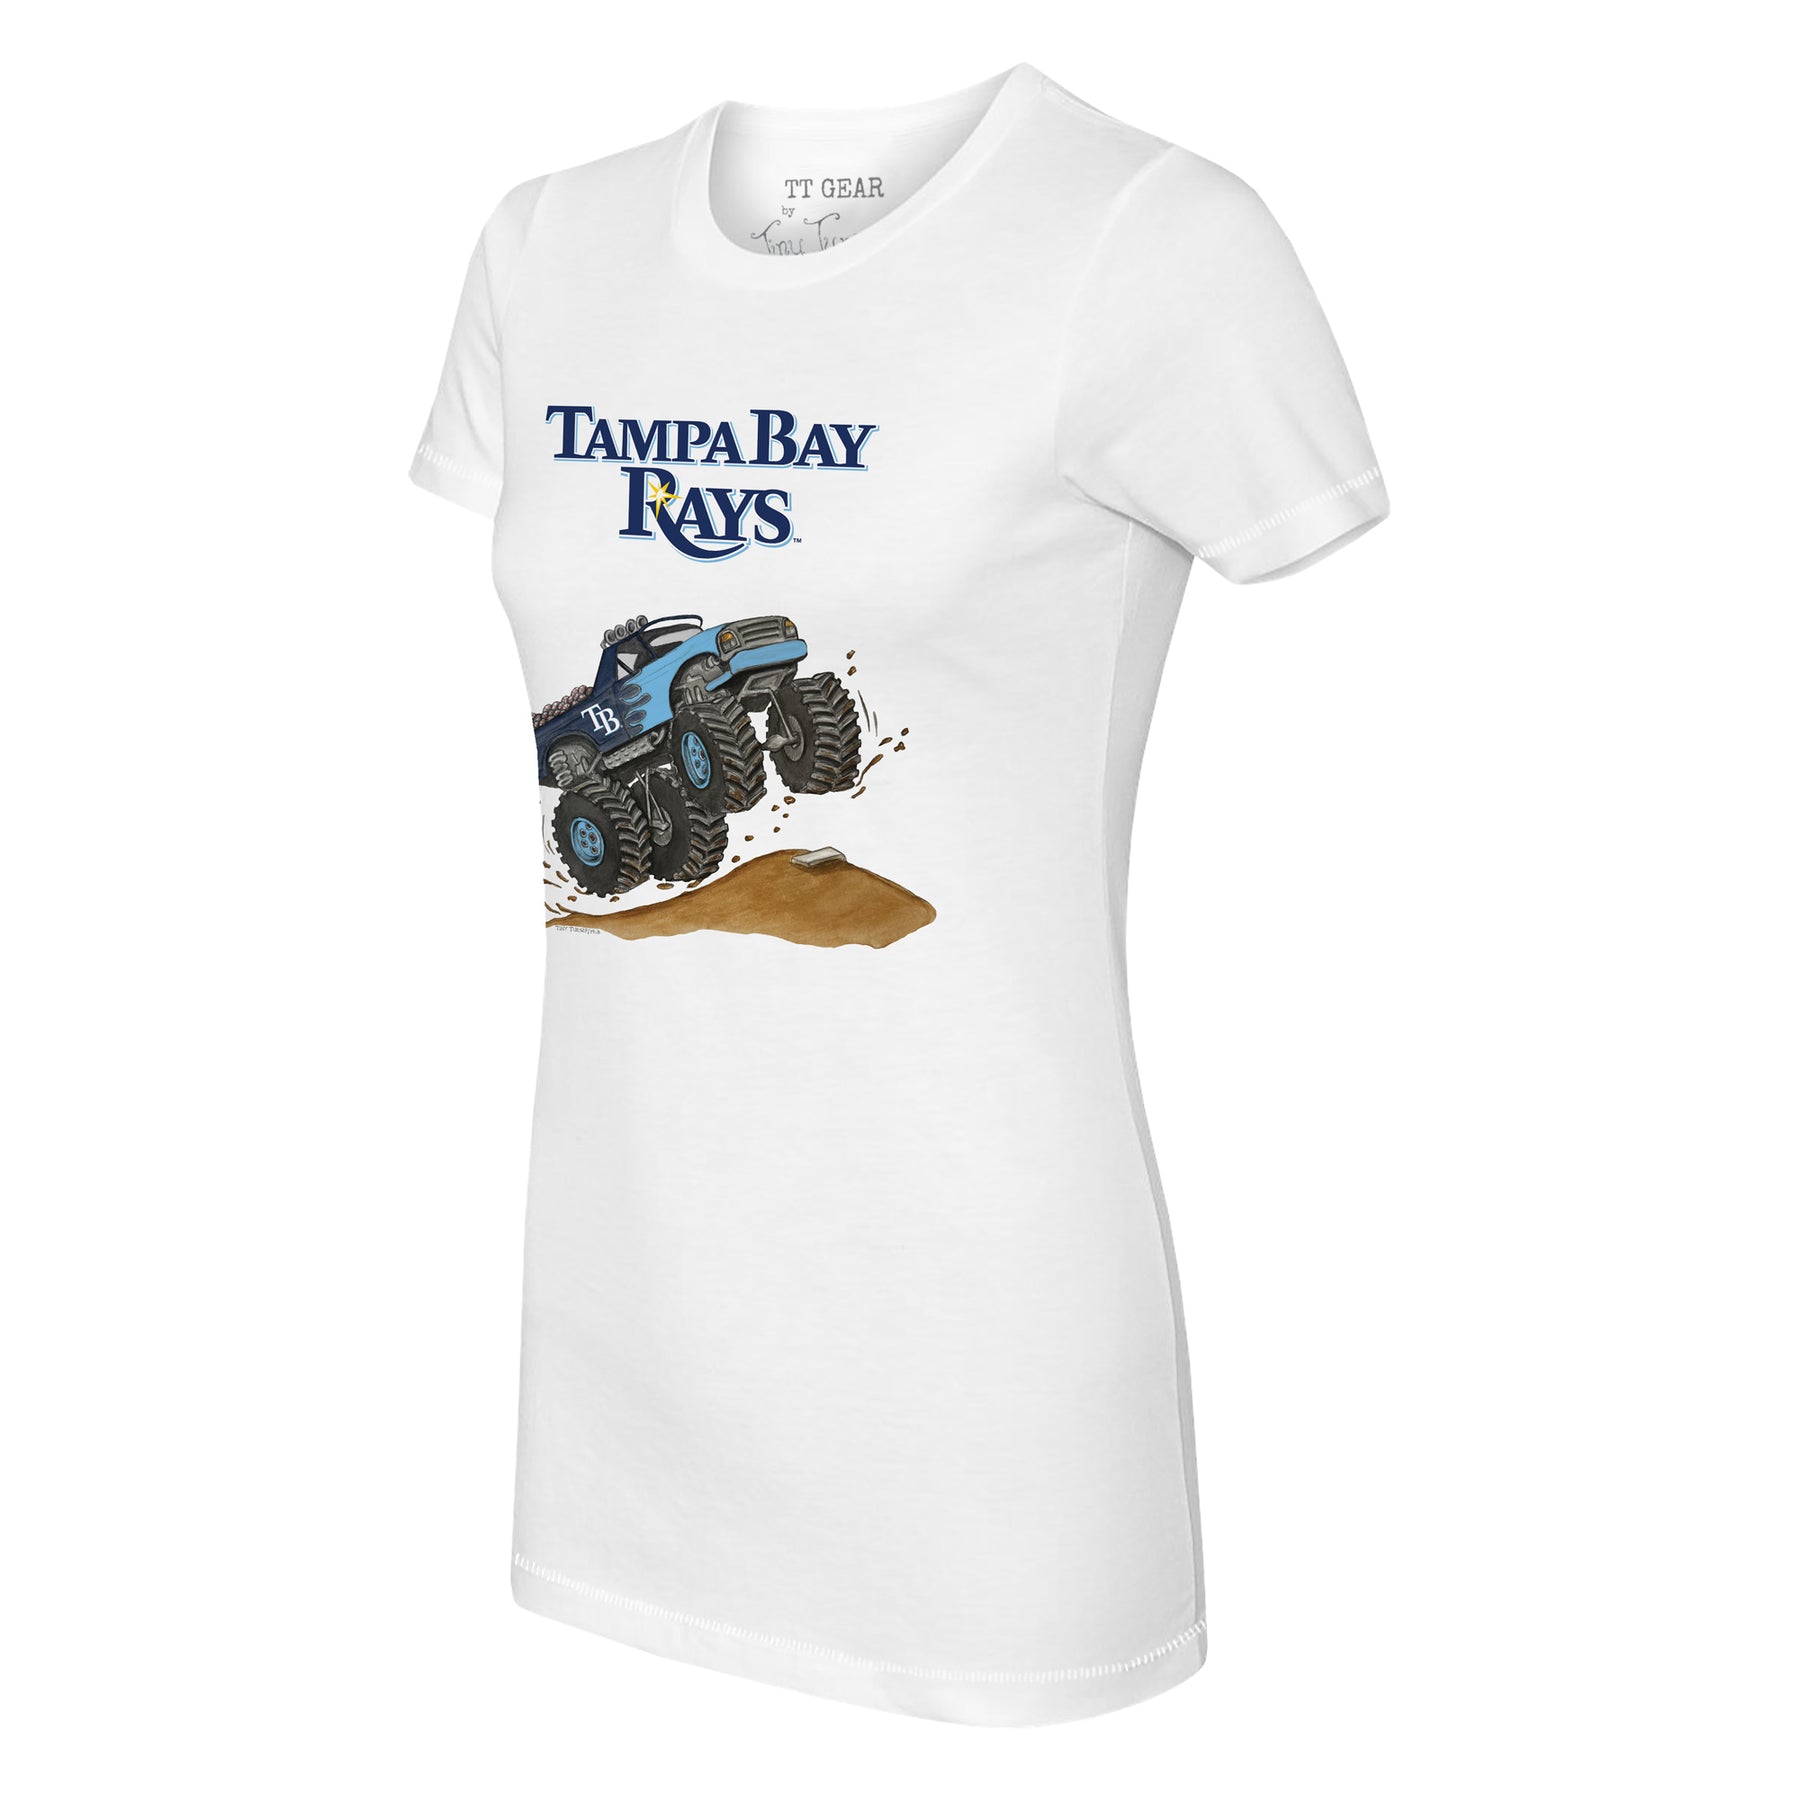 Tampa Bay Rays Monster Truck Tee Shirt